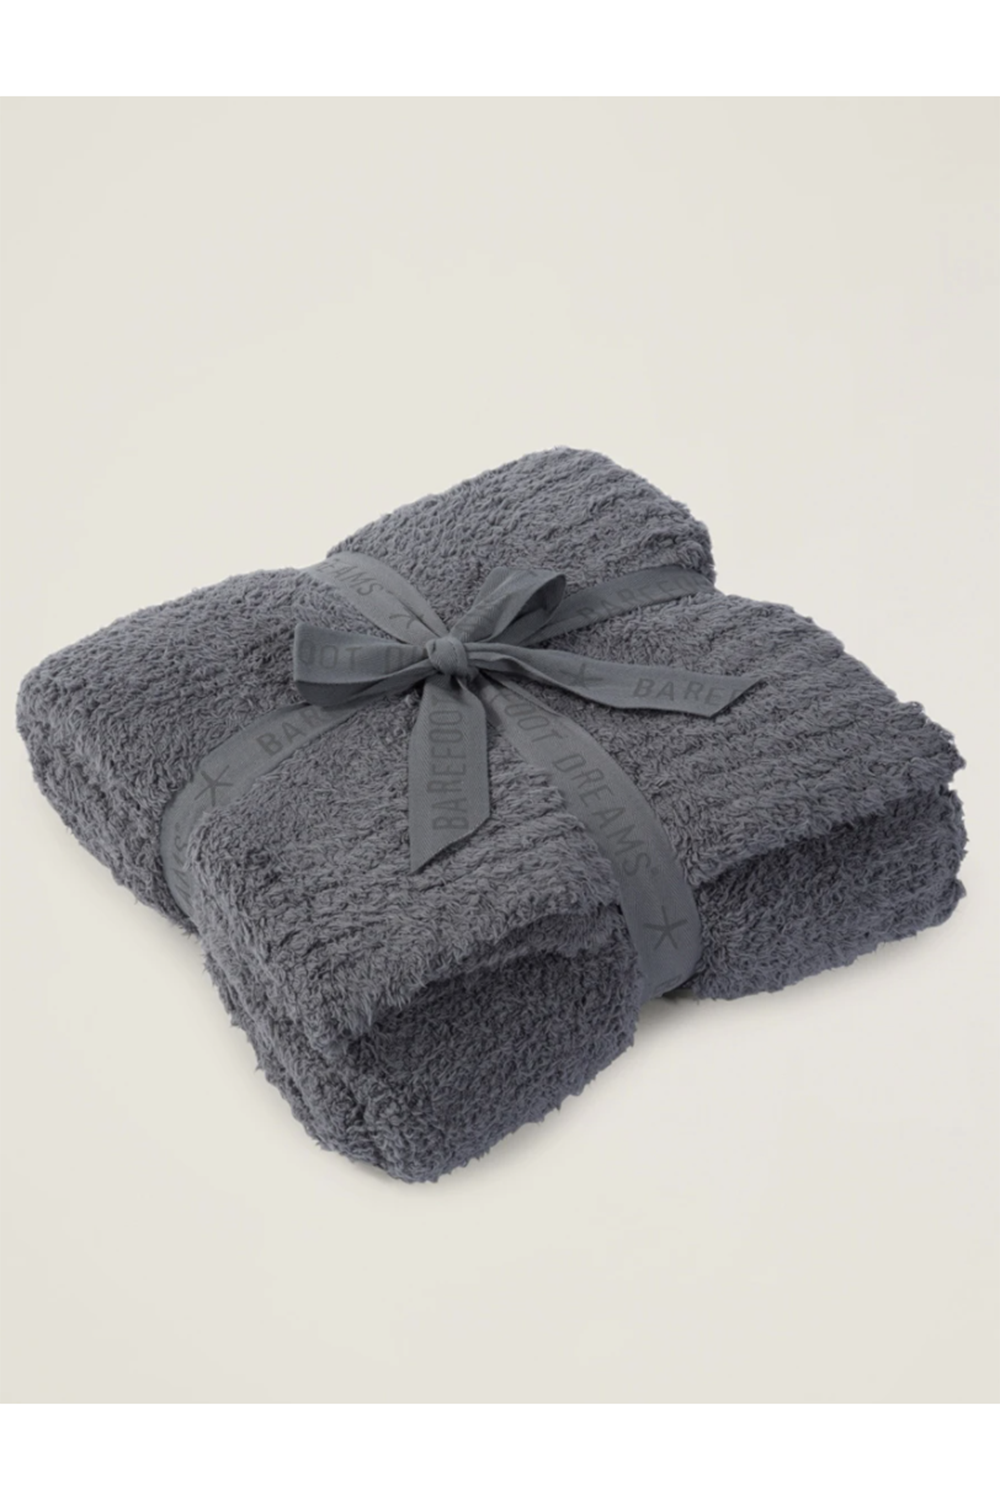 CozyChic Throw Blanket - Graphite Gray